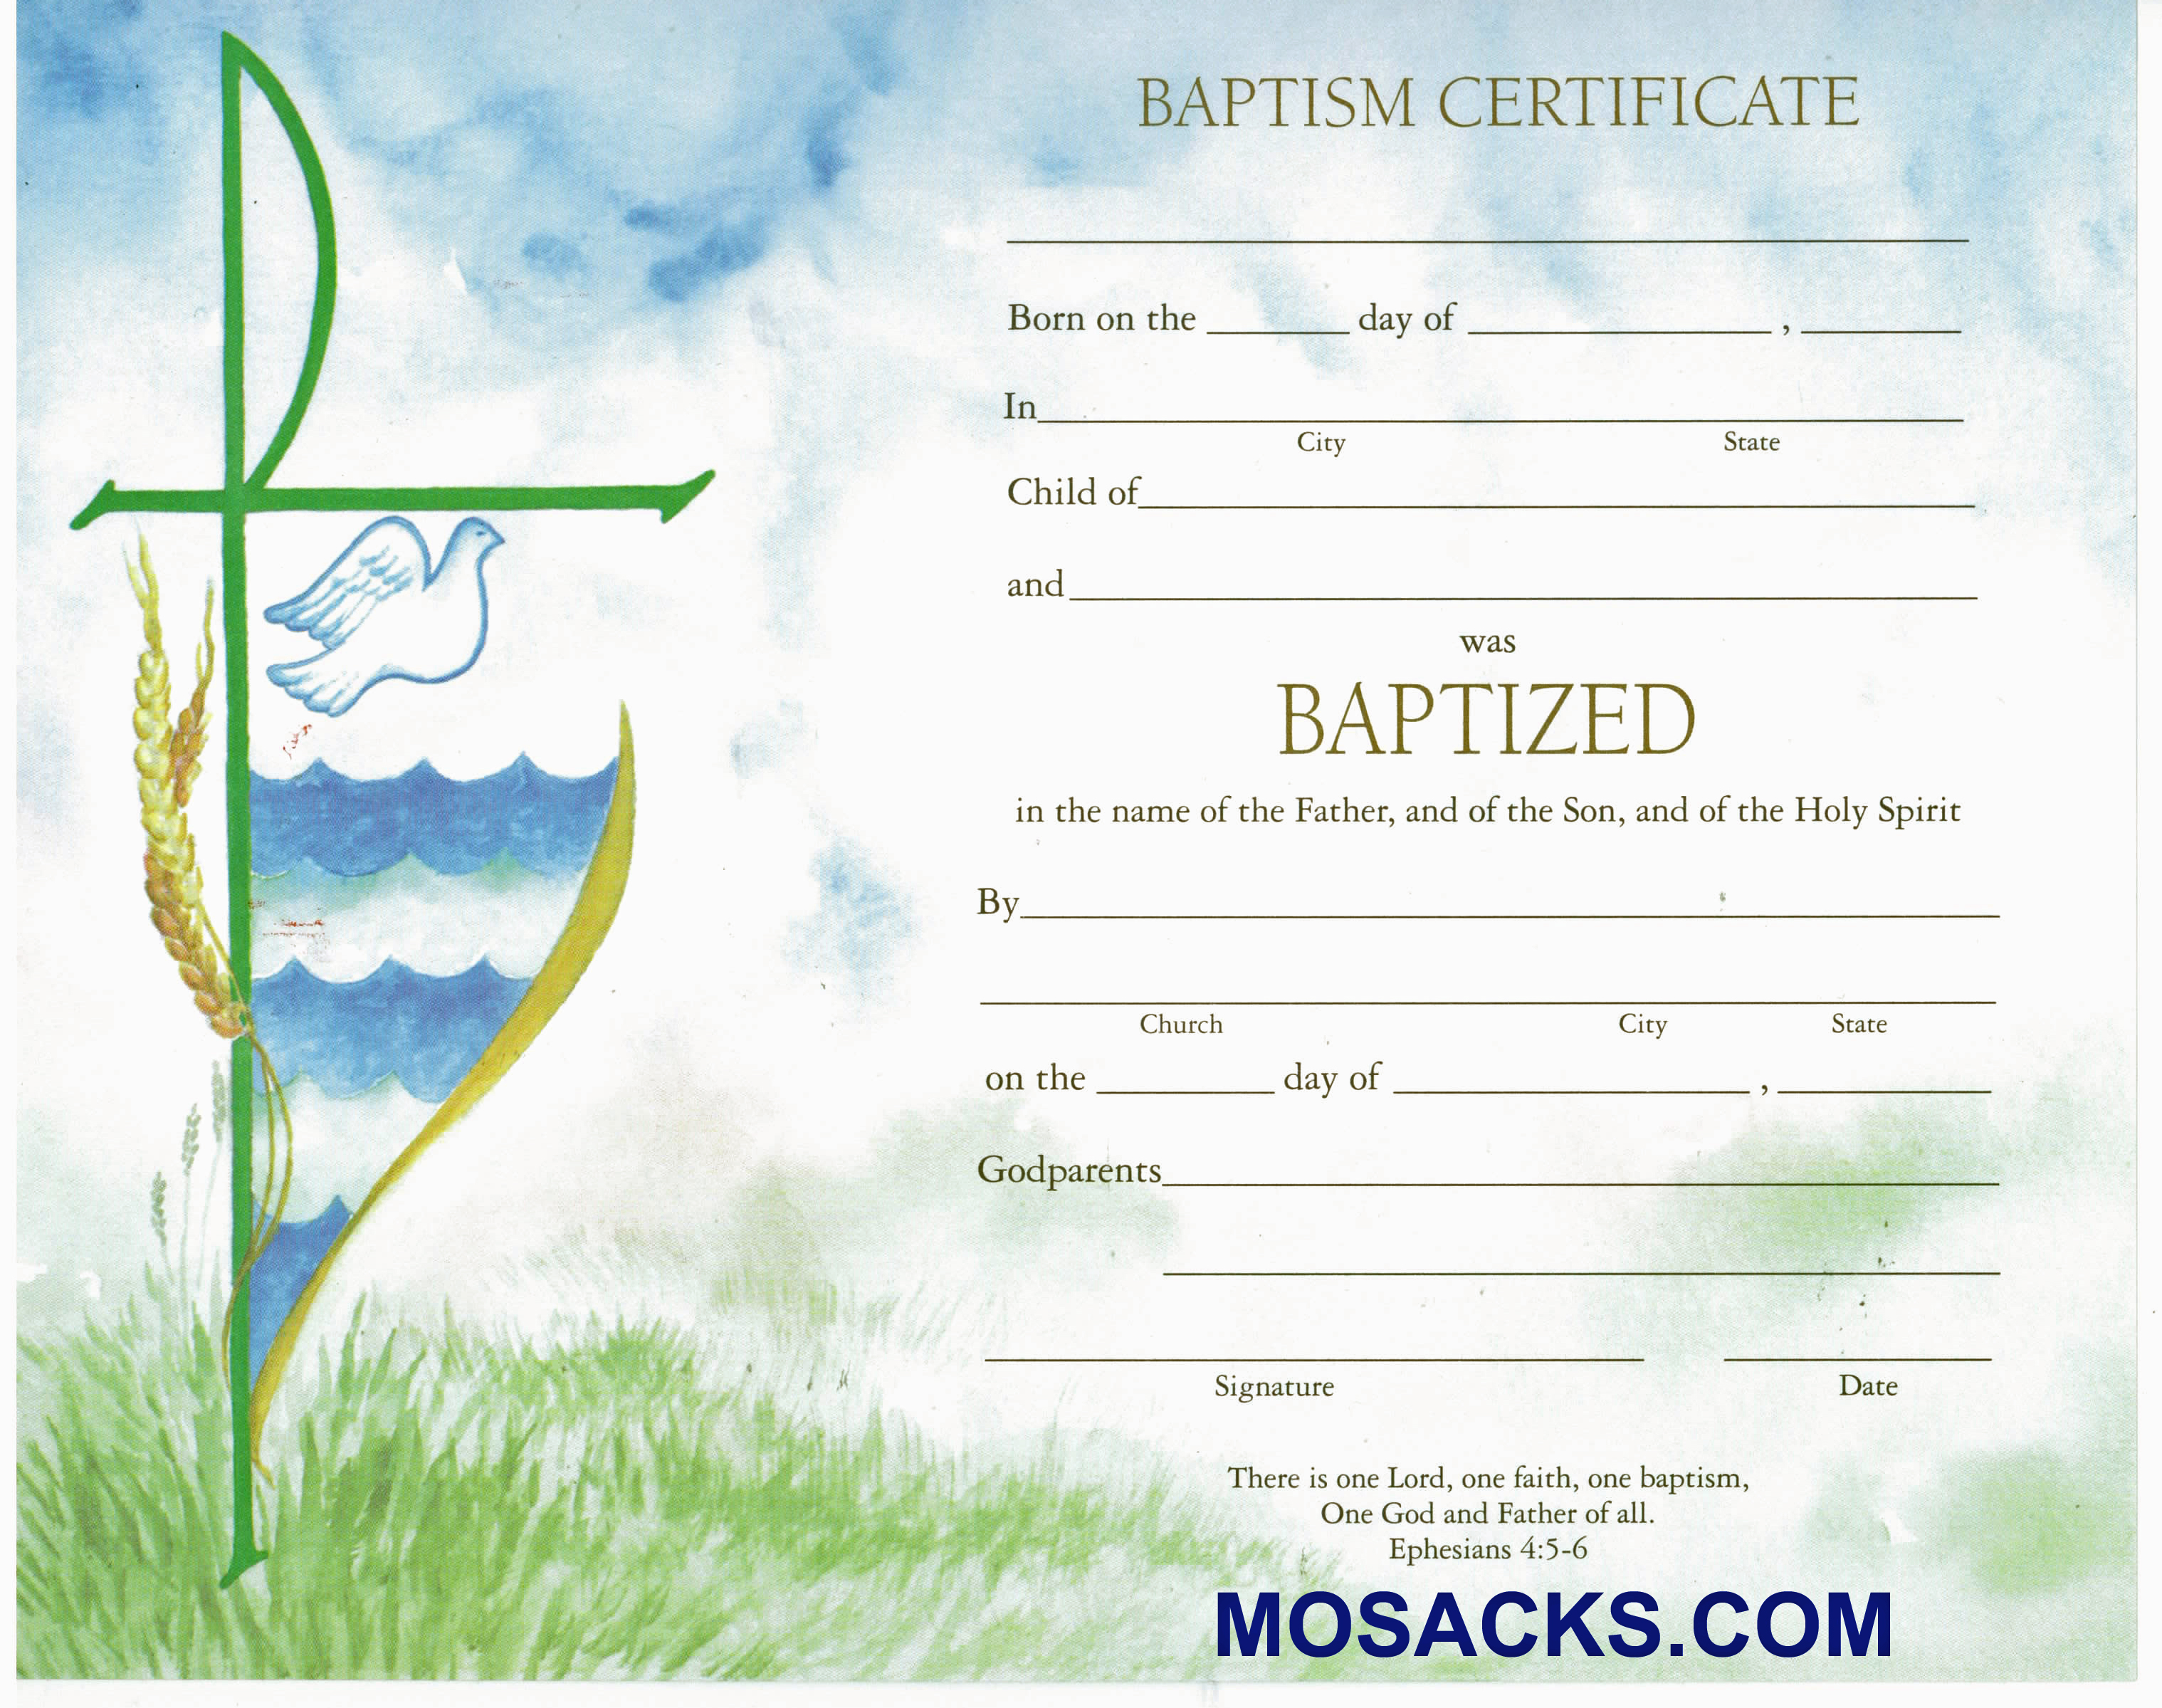 Baptism Certificate 8x10" full color-XD102B